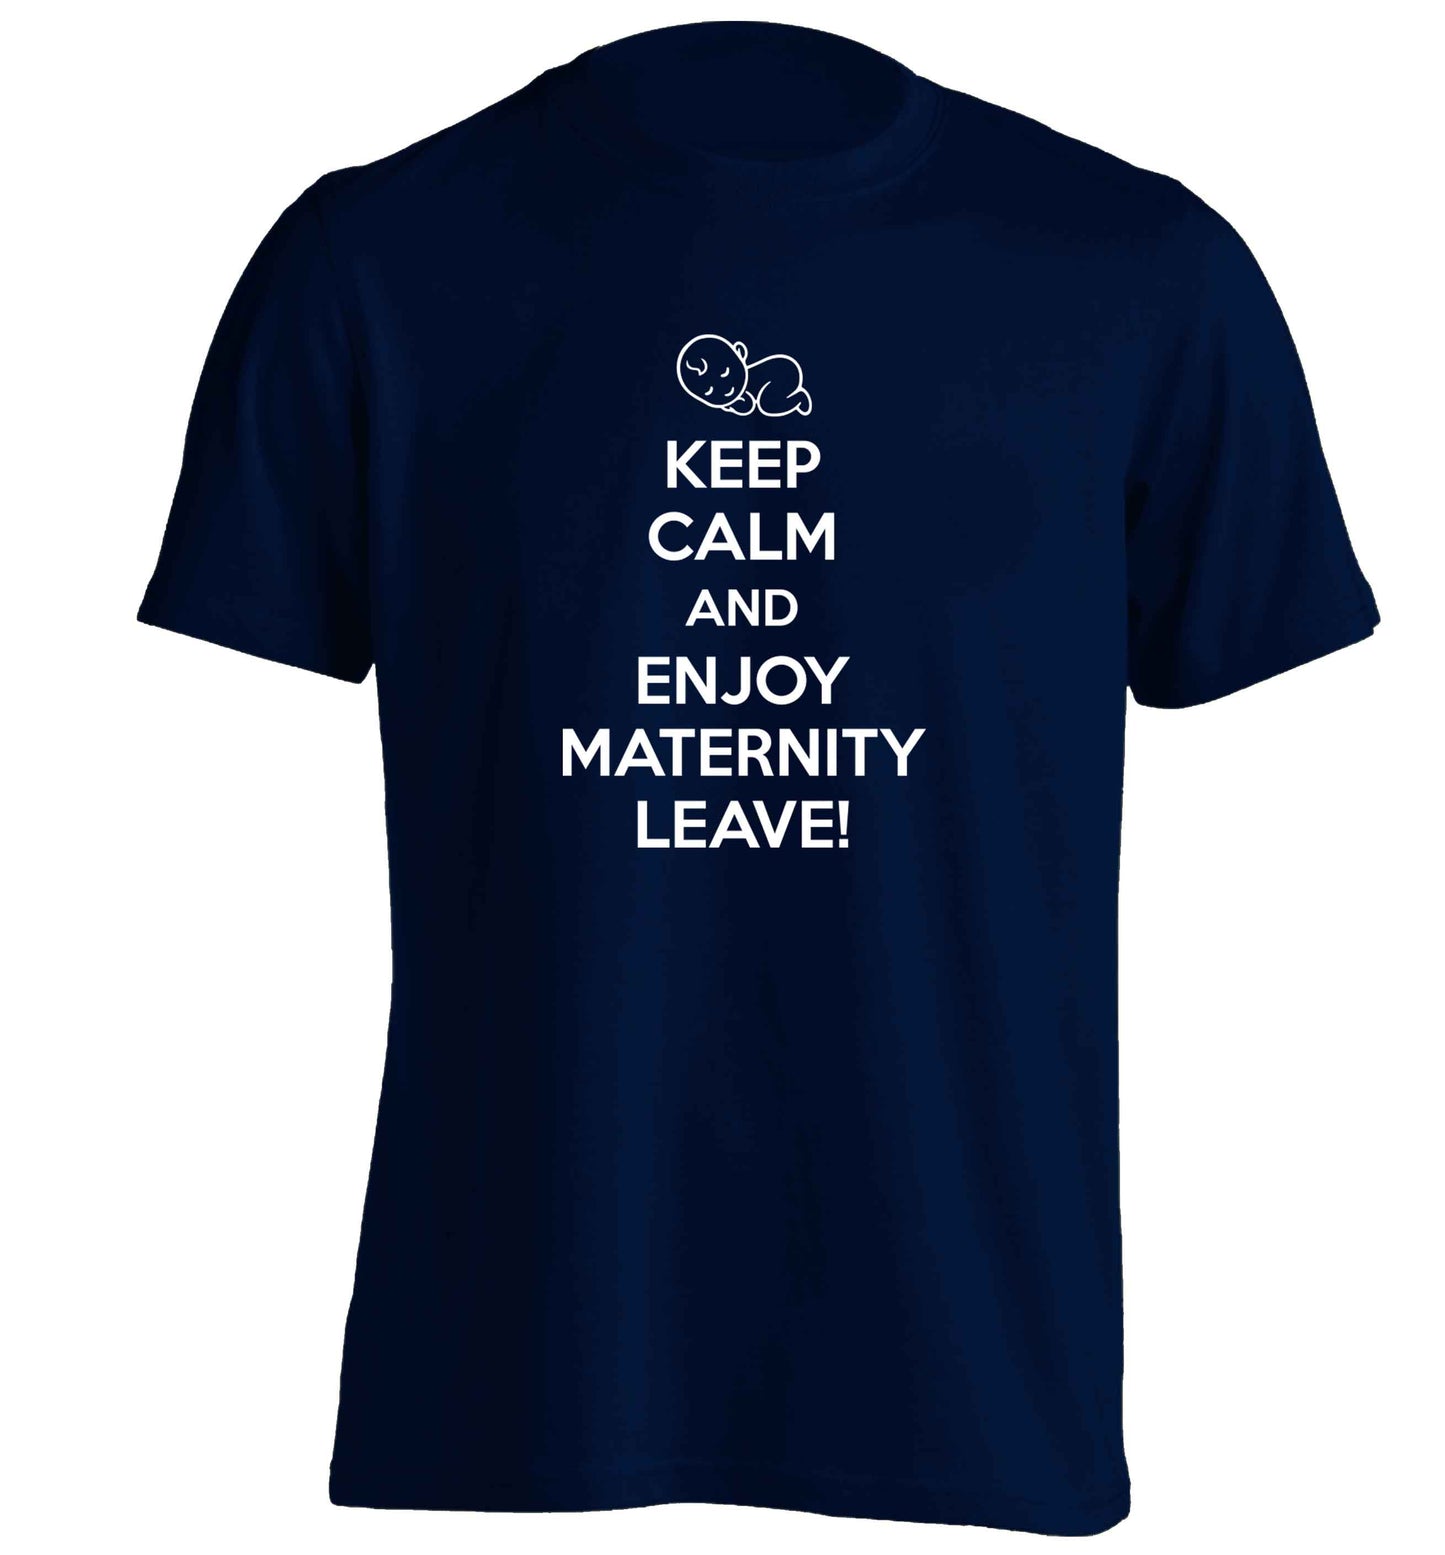 Keep calm and enjoy maternity leave adults unisex navy Tshirt 2XL